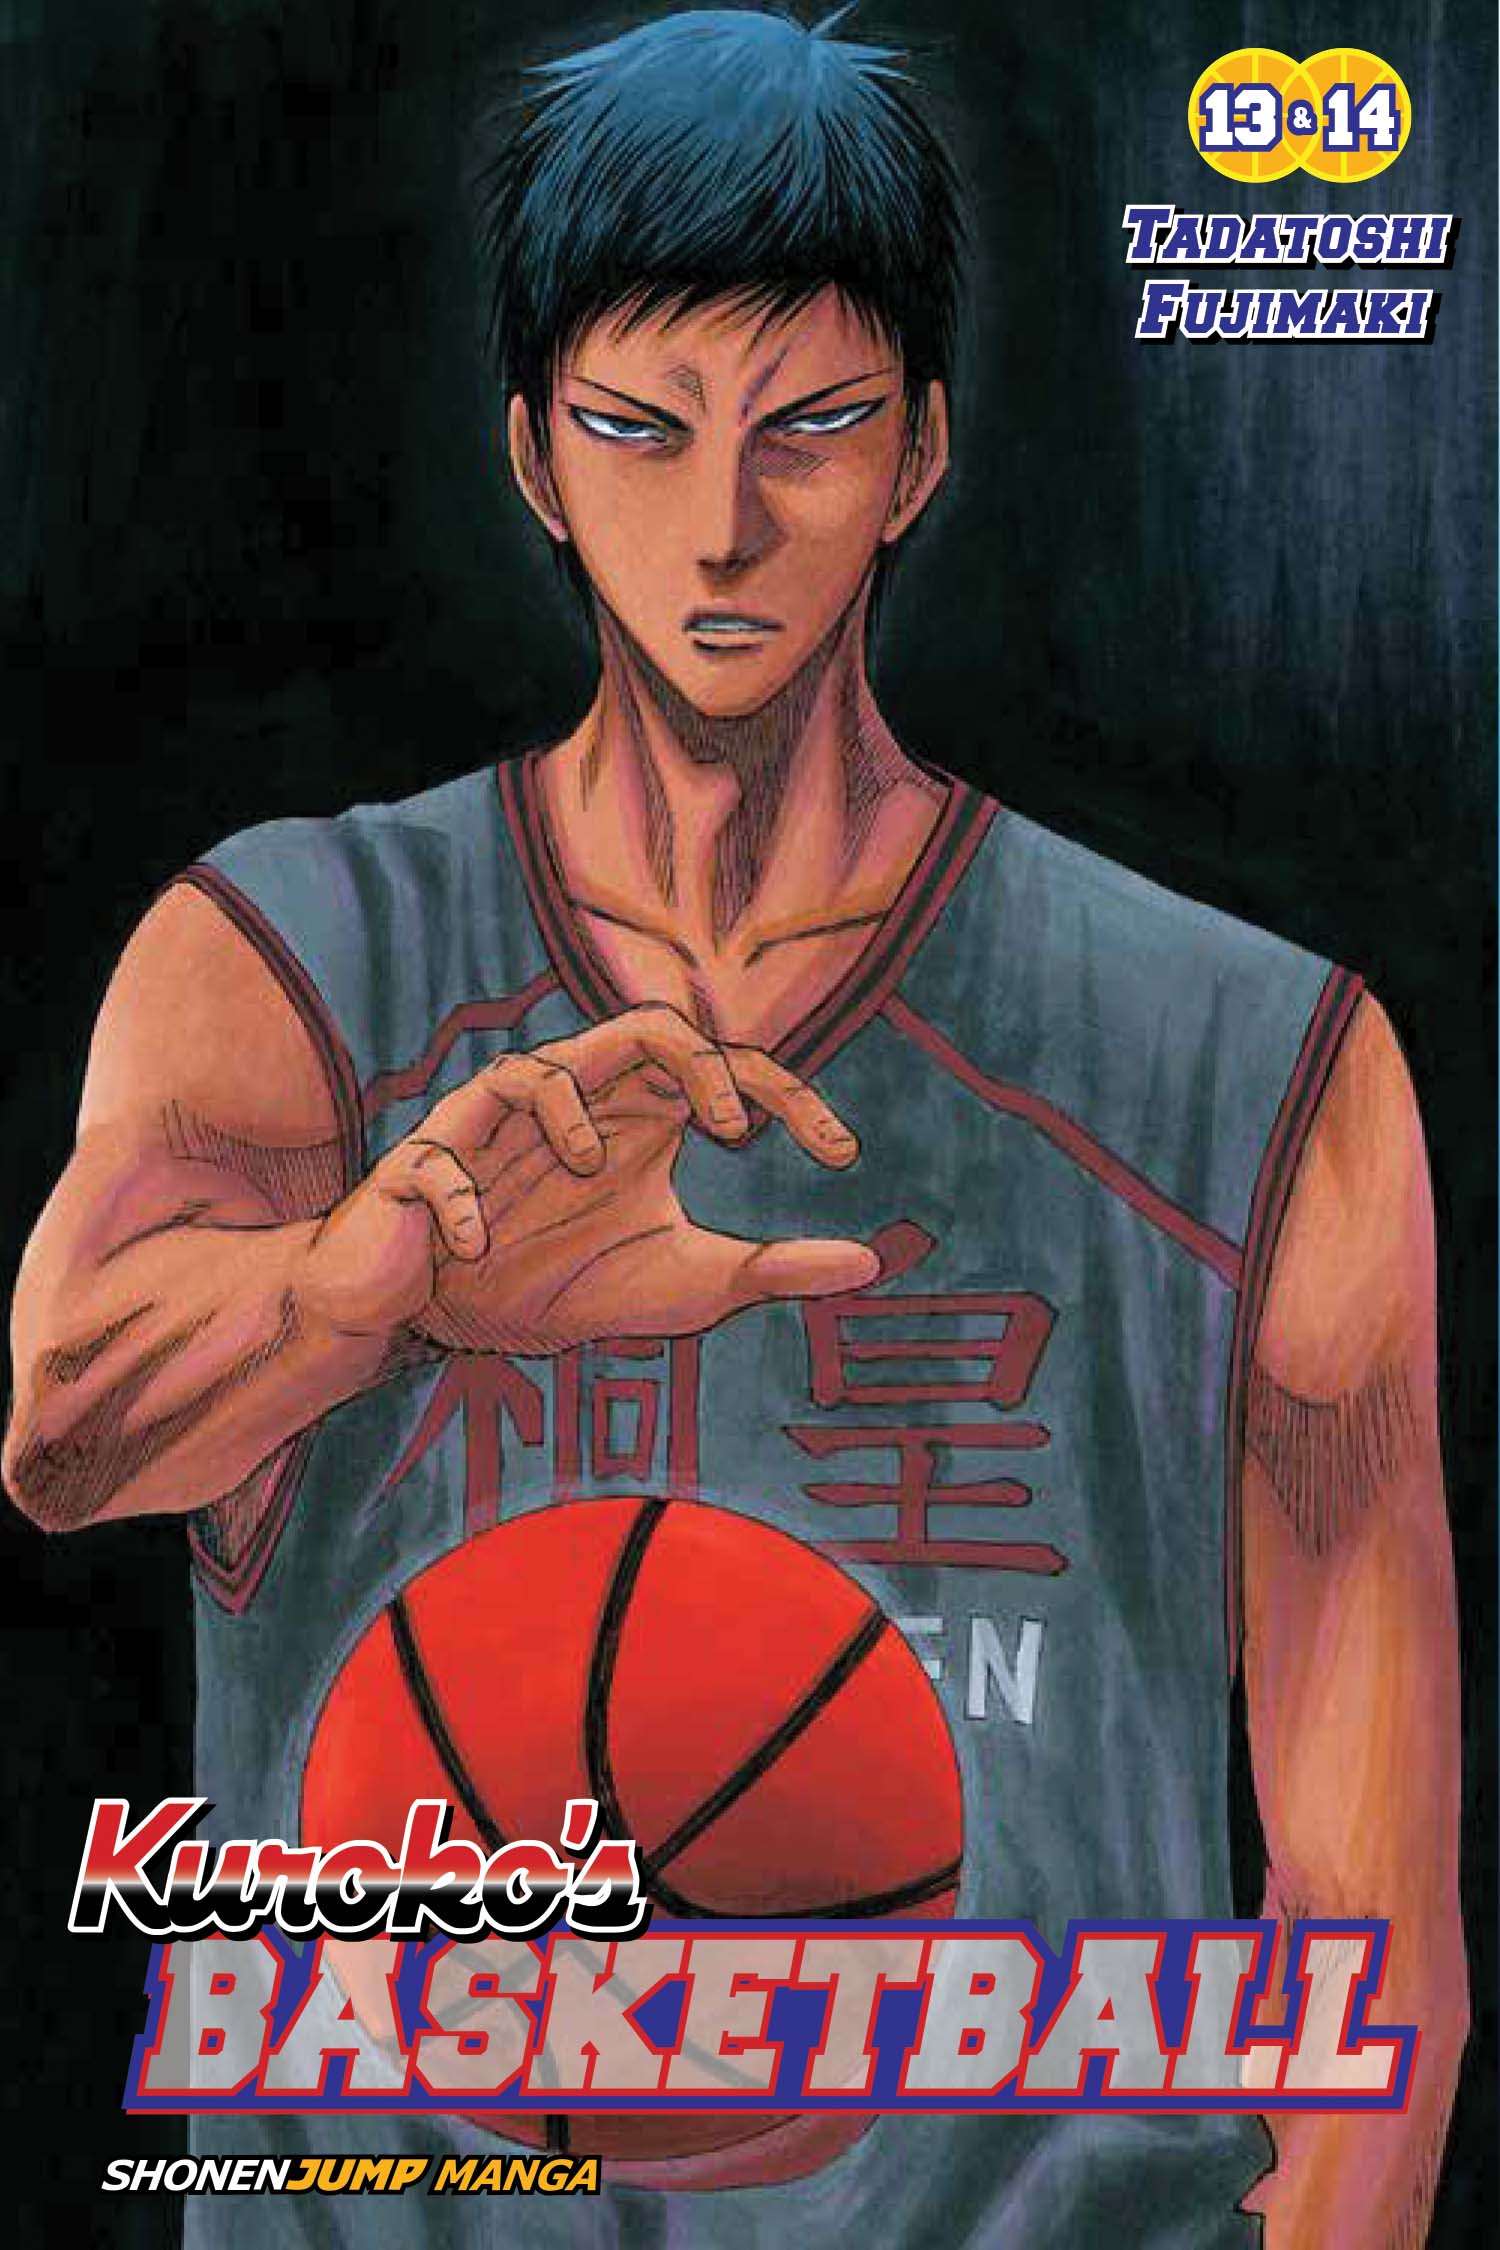 Kuroko's Basketball em português brasileiro - Crunchyroll